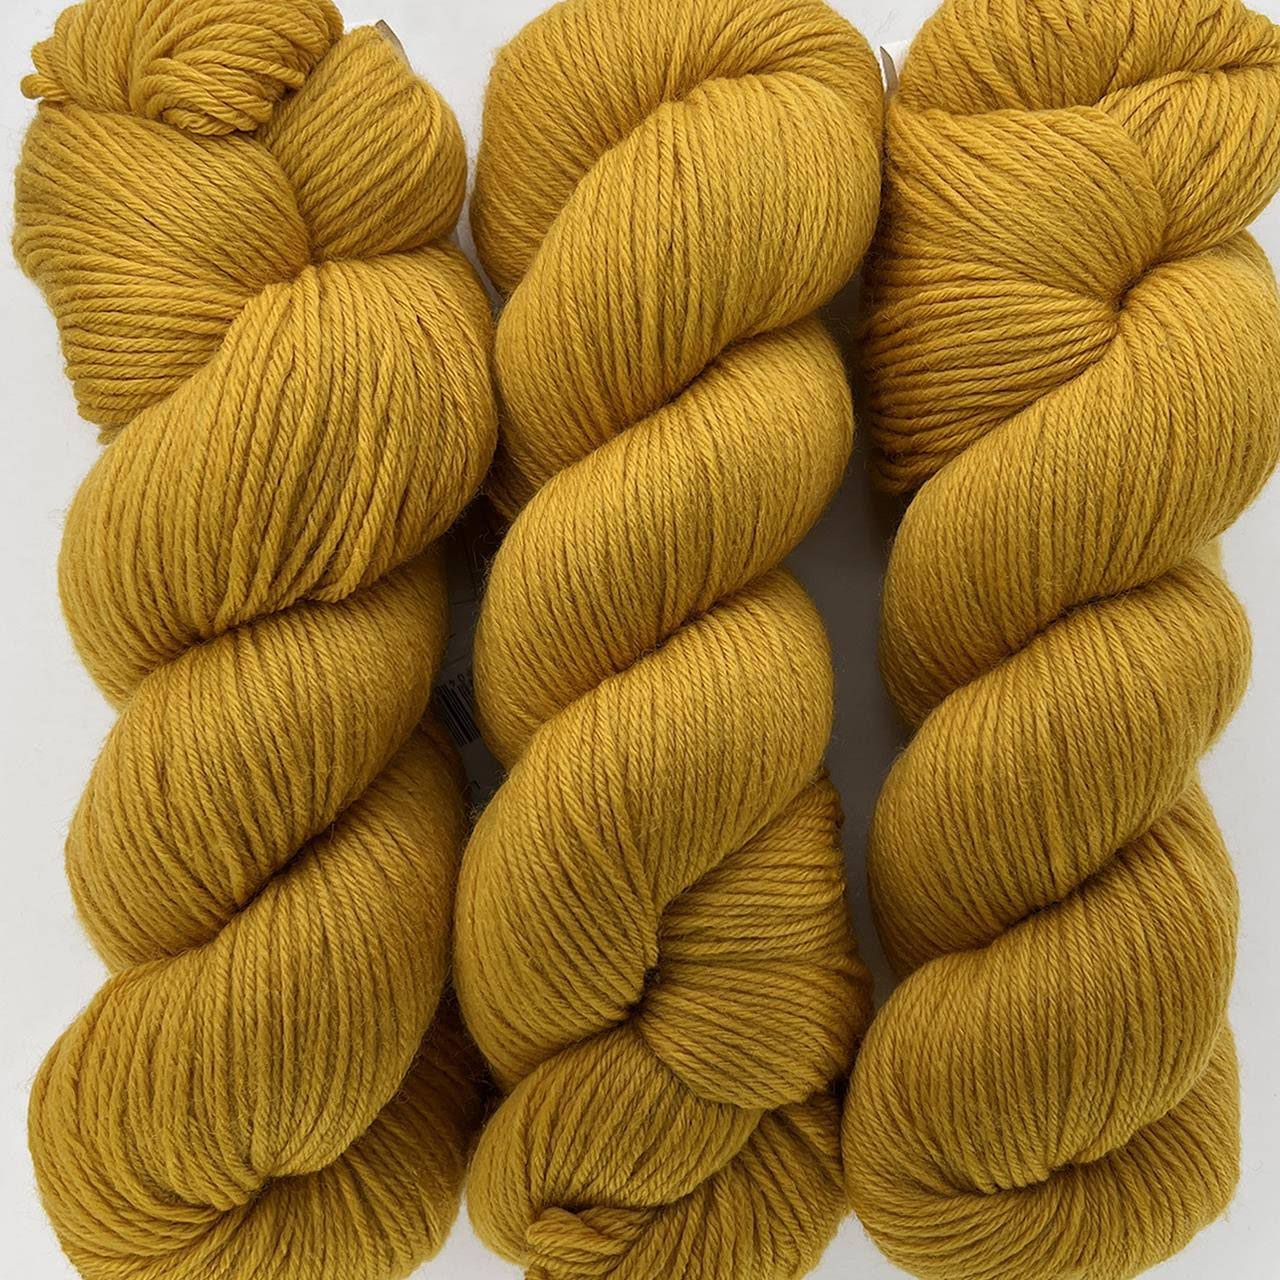 Cascade Yarns Heritage 6 - Golden Yellow (5752) 100g (3.5oz) 75% Merino Wool 25% Nylon